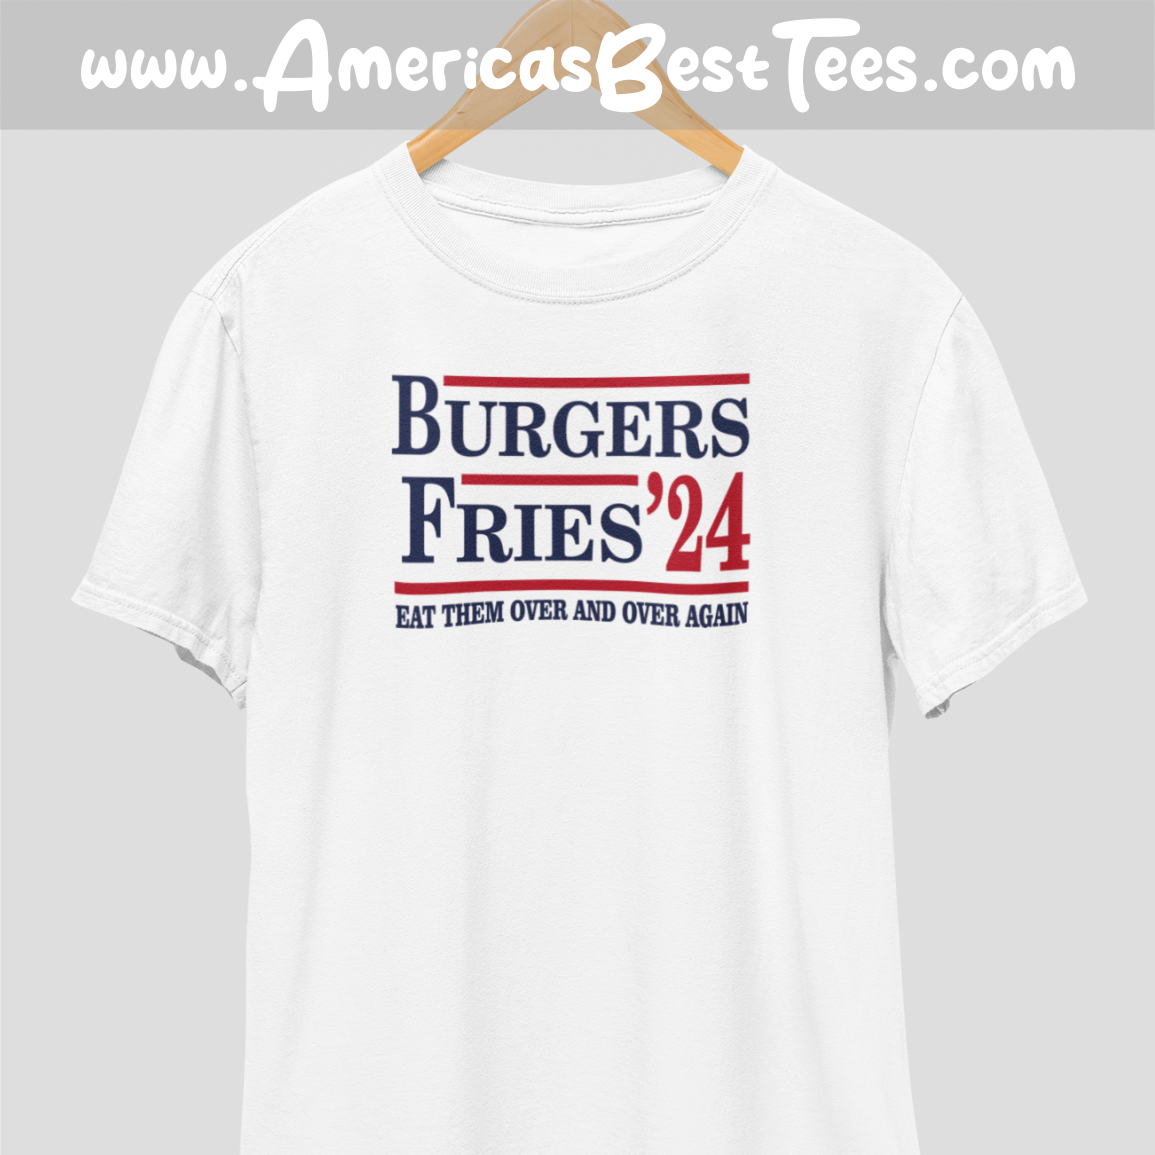 Burgers Fries '24 T-Shirt